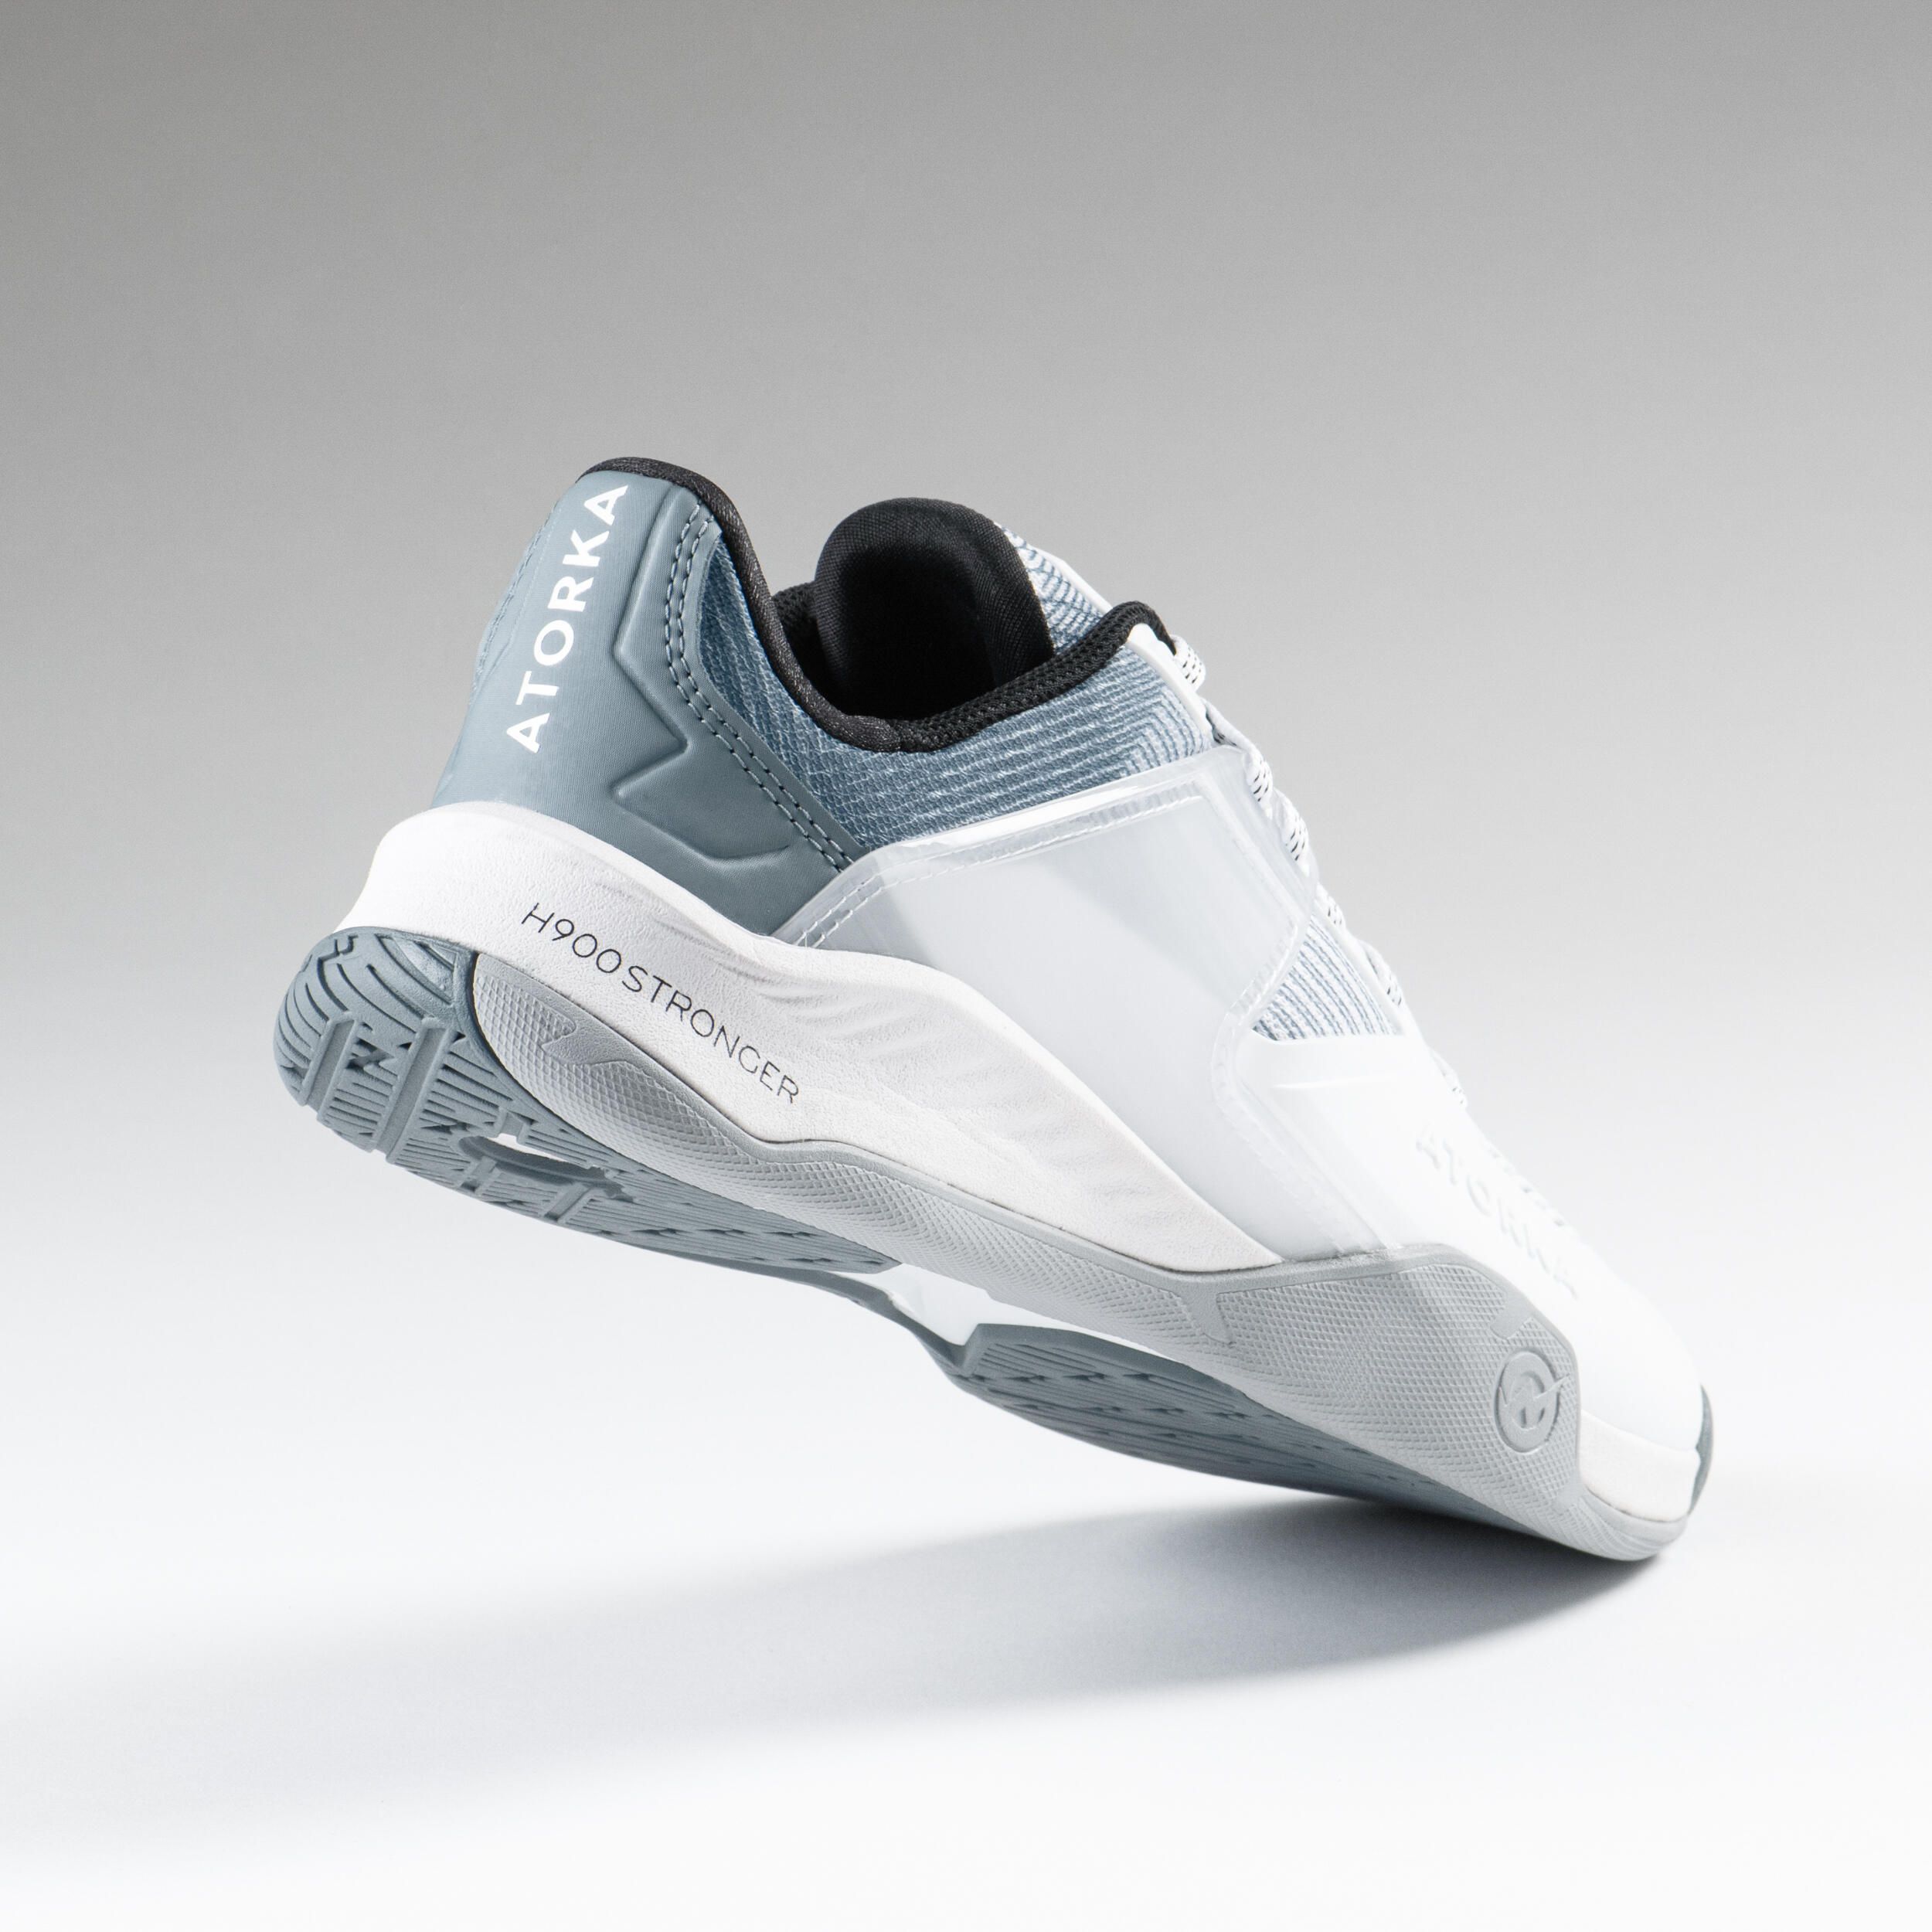 Adult Handball Shoes H900 Stronger - White/Grey 4/6